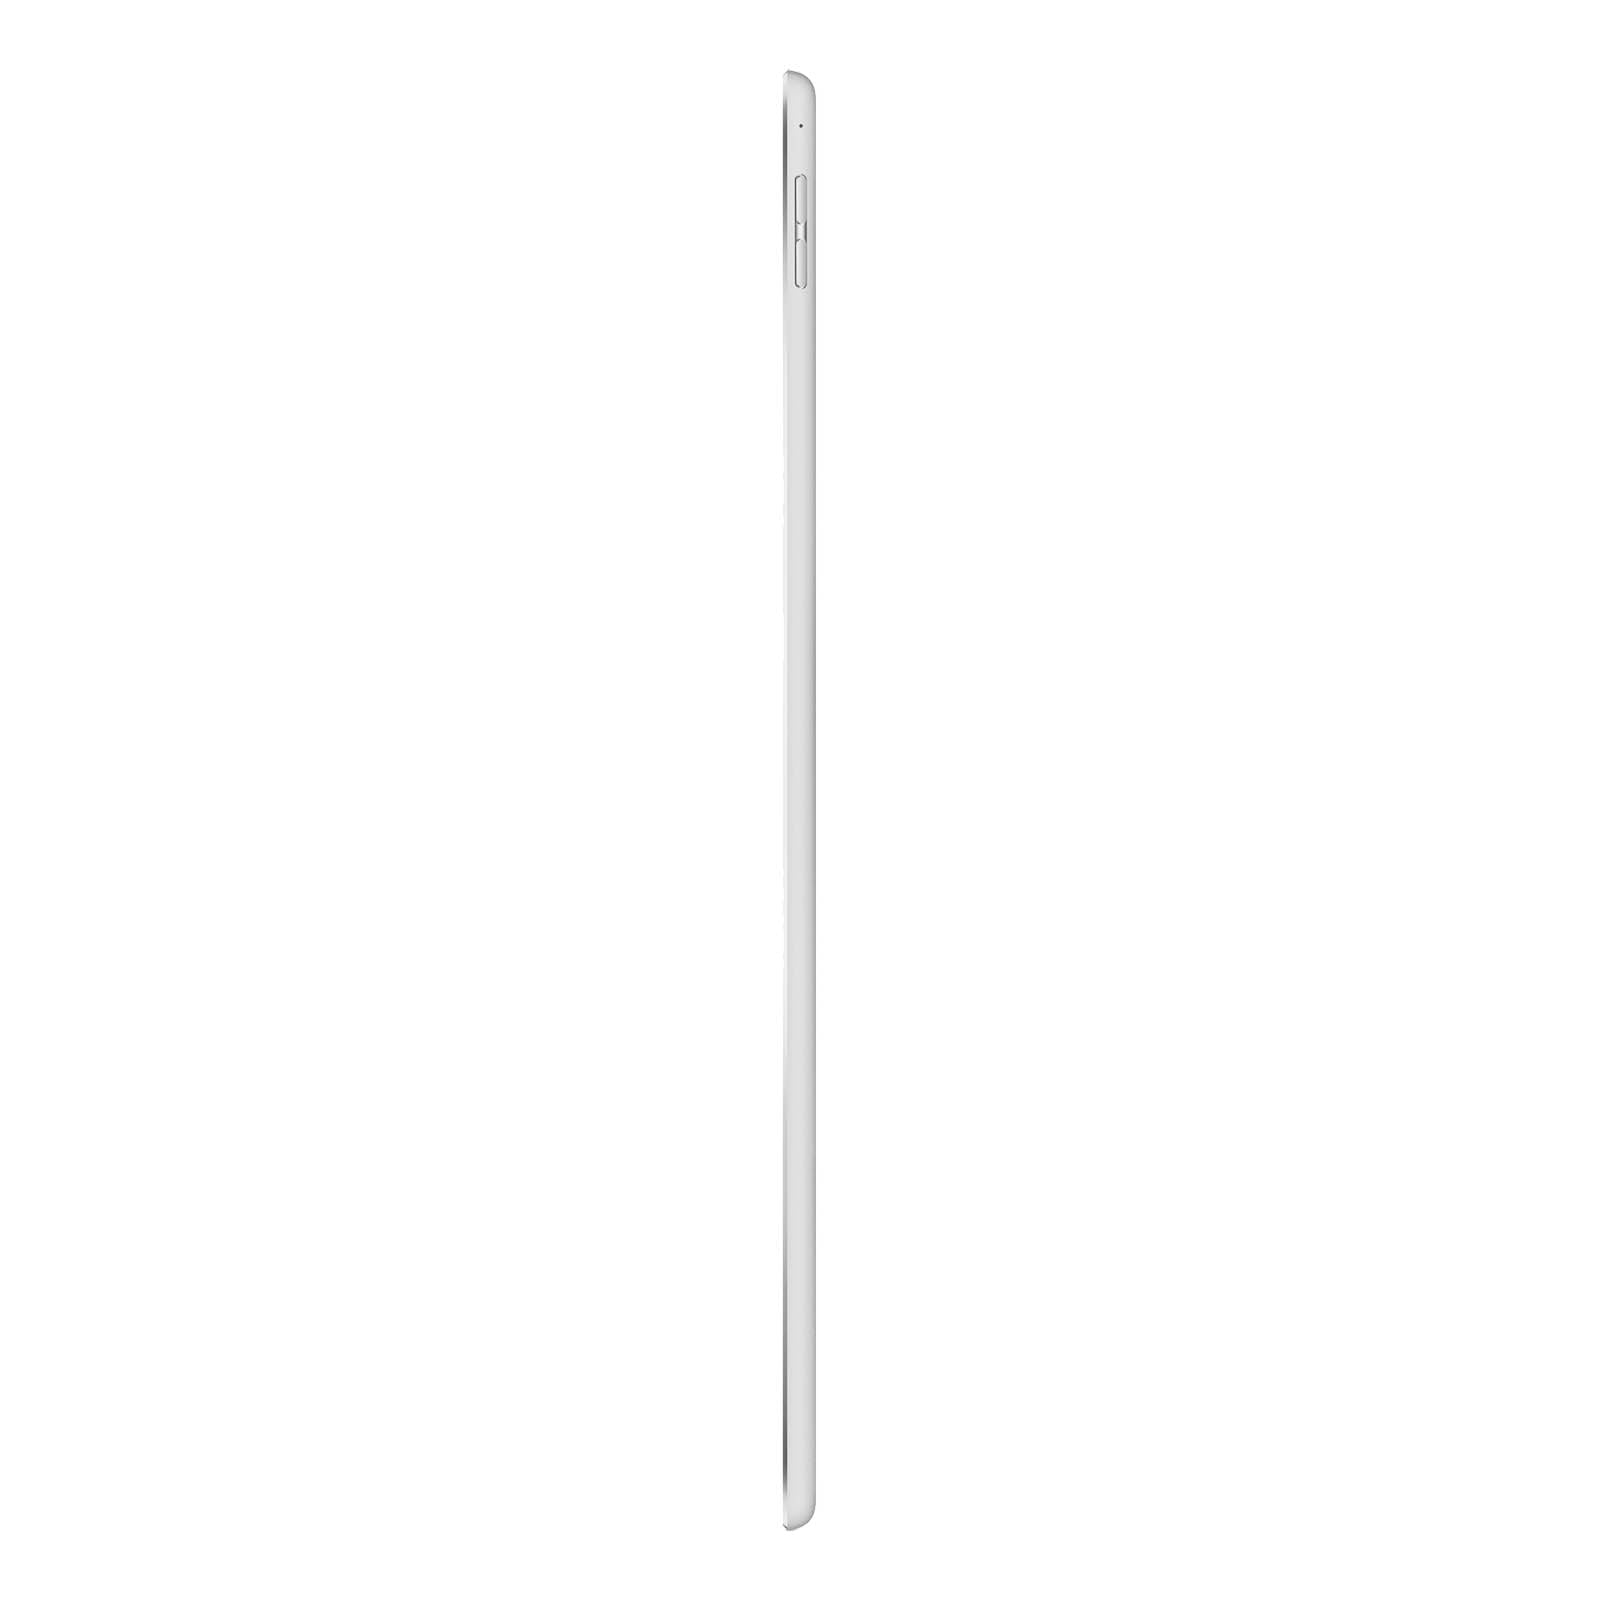 Apple iPad Pro 12.9" 1st Gen 128GB Silver Good - WiFi